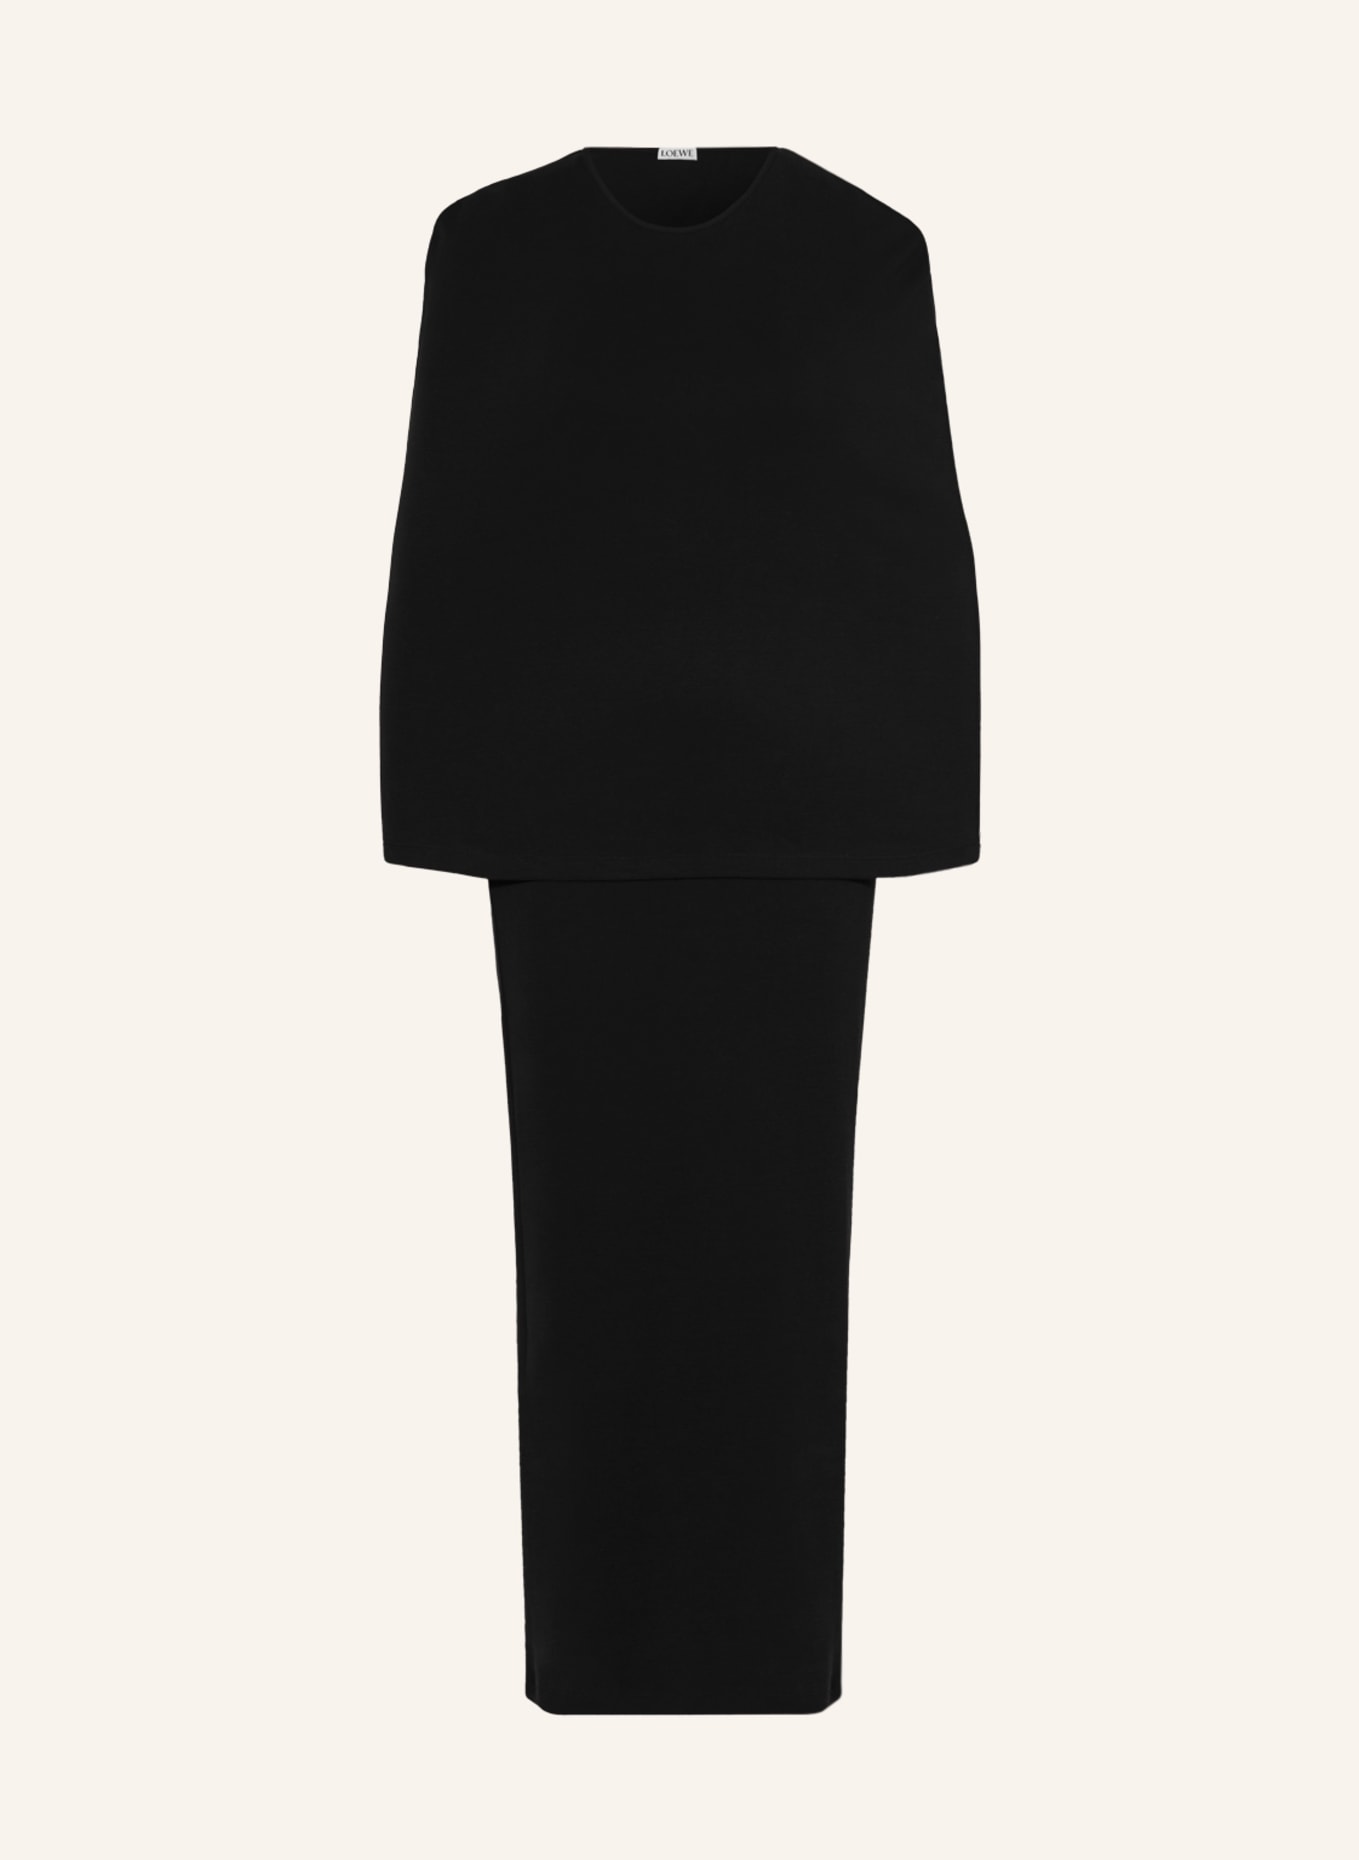 LOEWE Jerseykleid, Farbe: SCHWARZ (Bild 1)